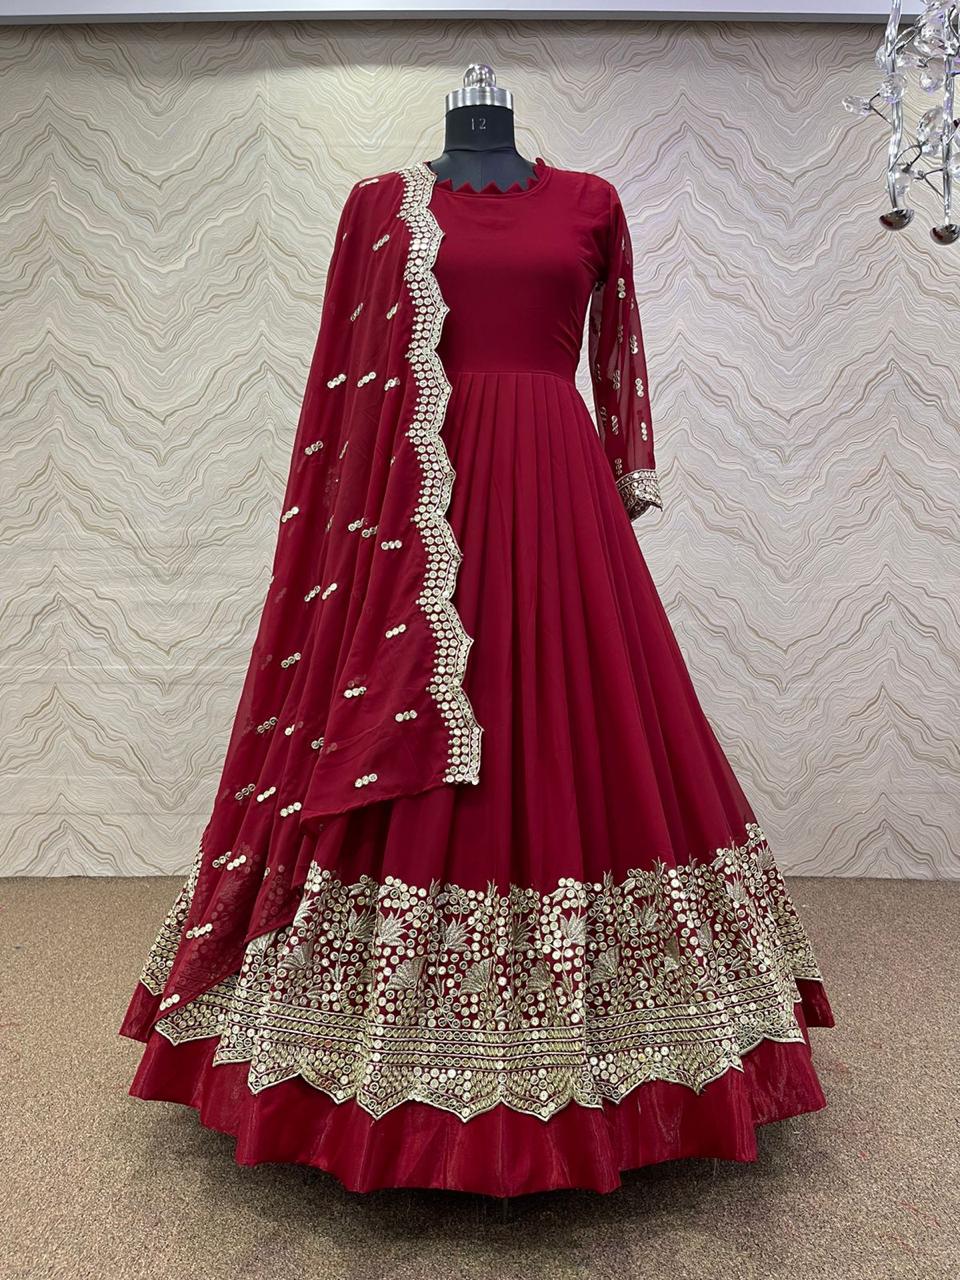 Latest Libas Collection | Lehenga Set,Ready To Wear Saree,Kurta Sets |  Wedding/Partywear Outfit Haul - YouTube